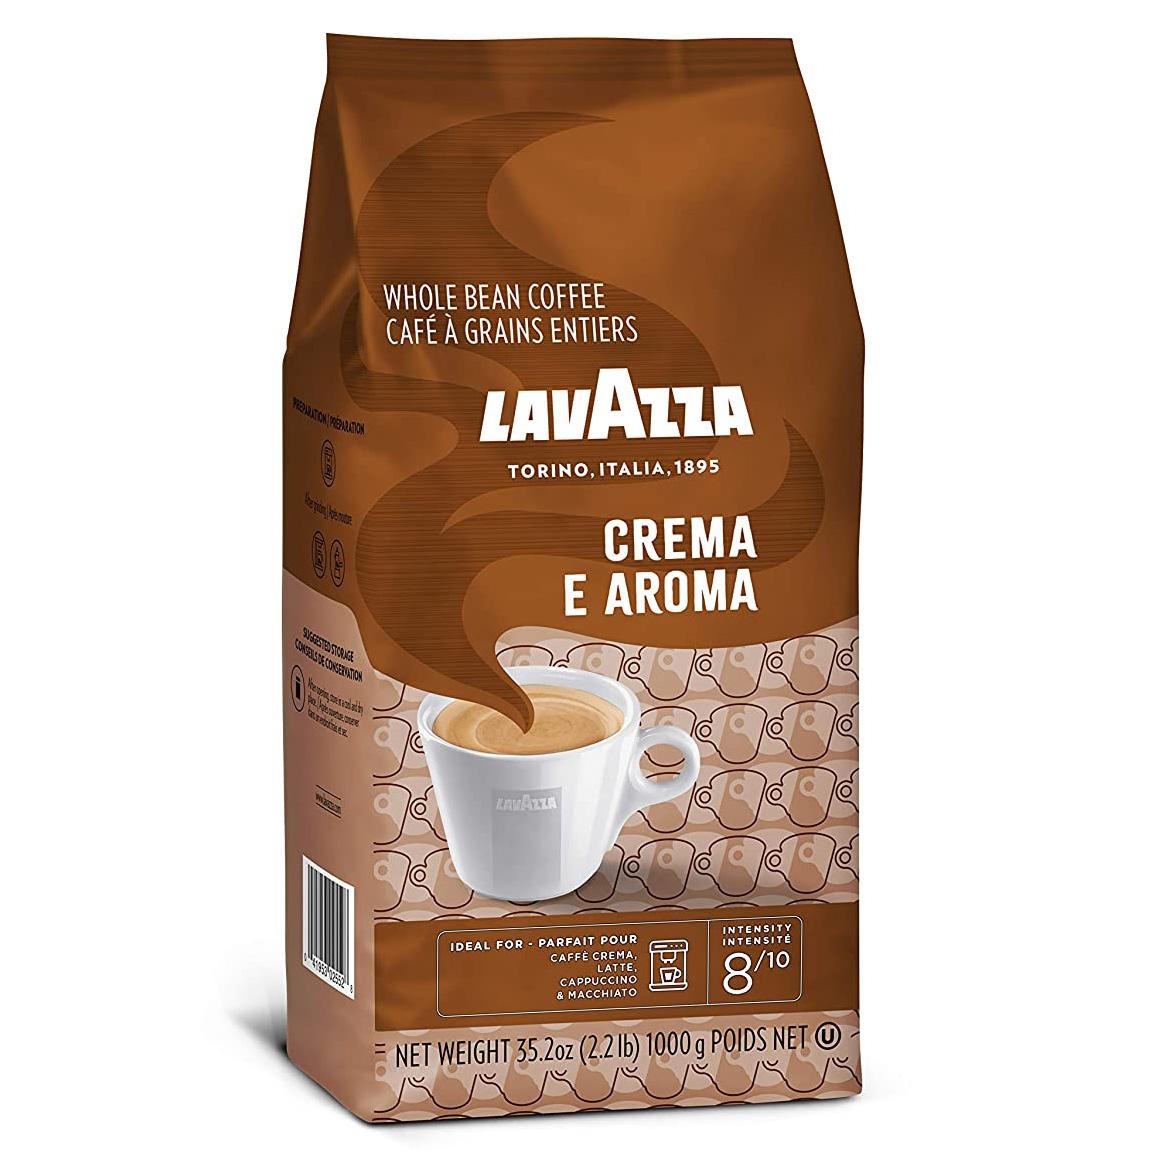 2.2lb Lavazza Crema E Aroma Whole Bean Coffee Blend for $12.59 Shipped